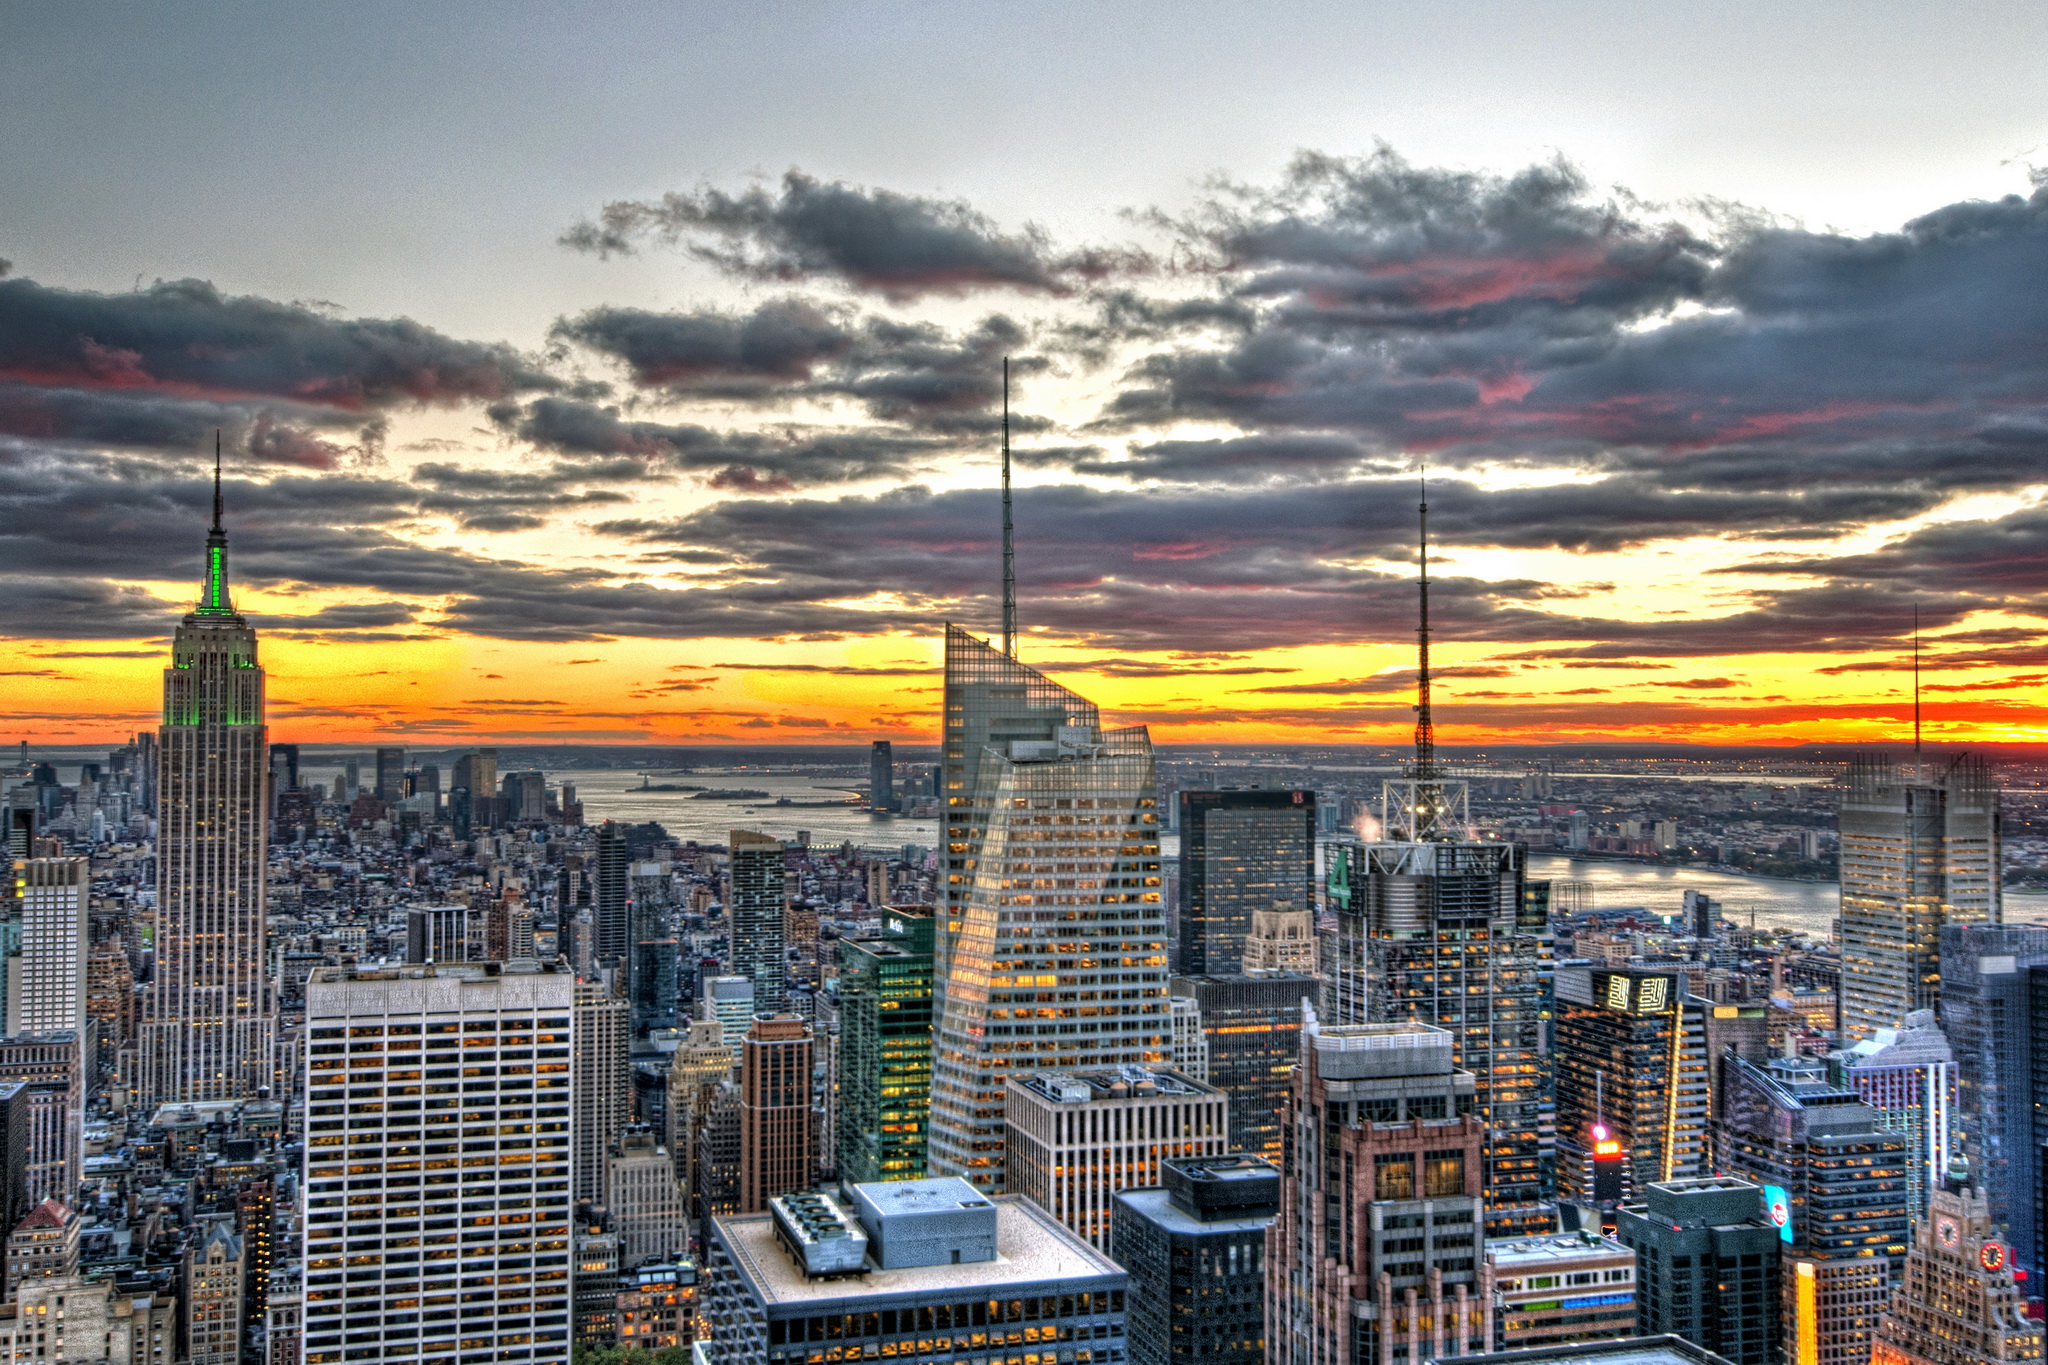 New town 4. Нью-Йорк HDRI Panorama .HDR. Америка небоскребы Нью Йорк. Панорама небоскребов Нью-Йорка. Панорама 360 Нью Йорк.